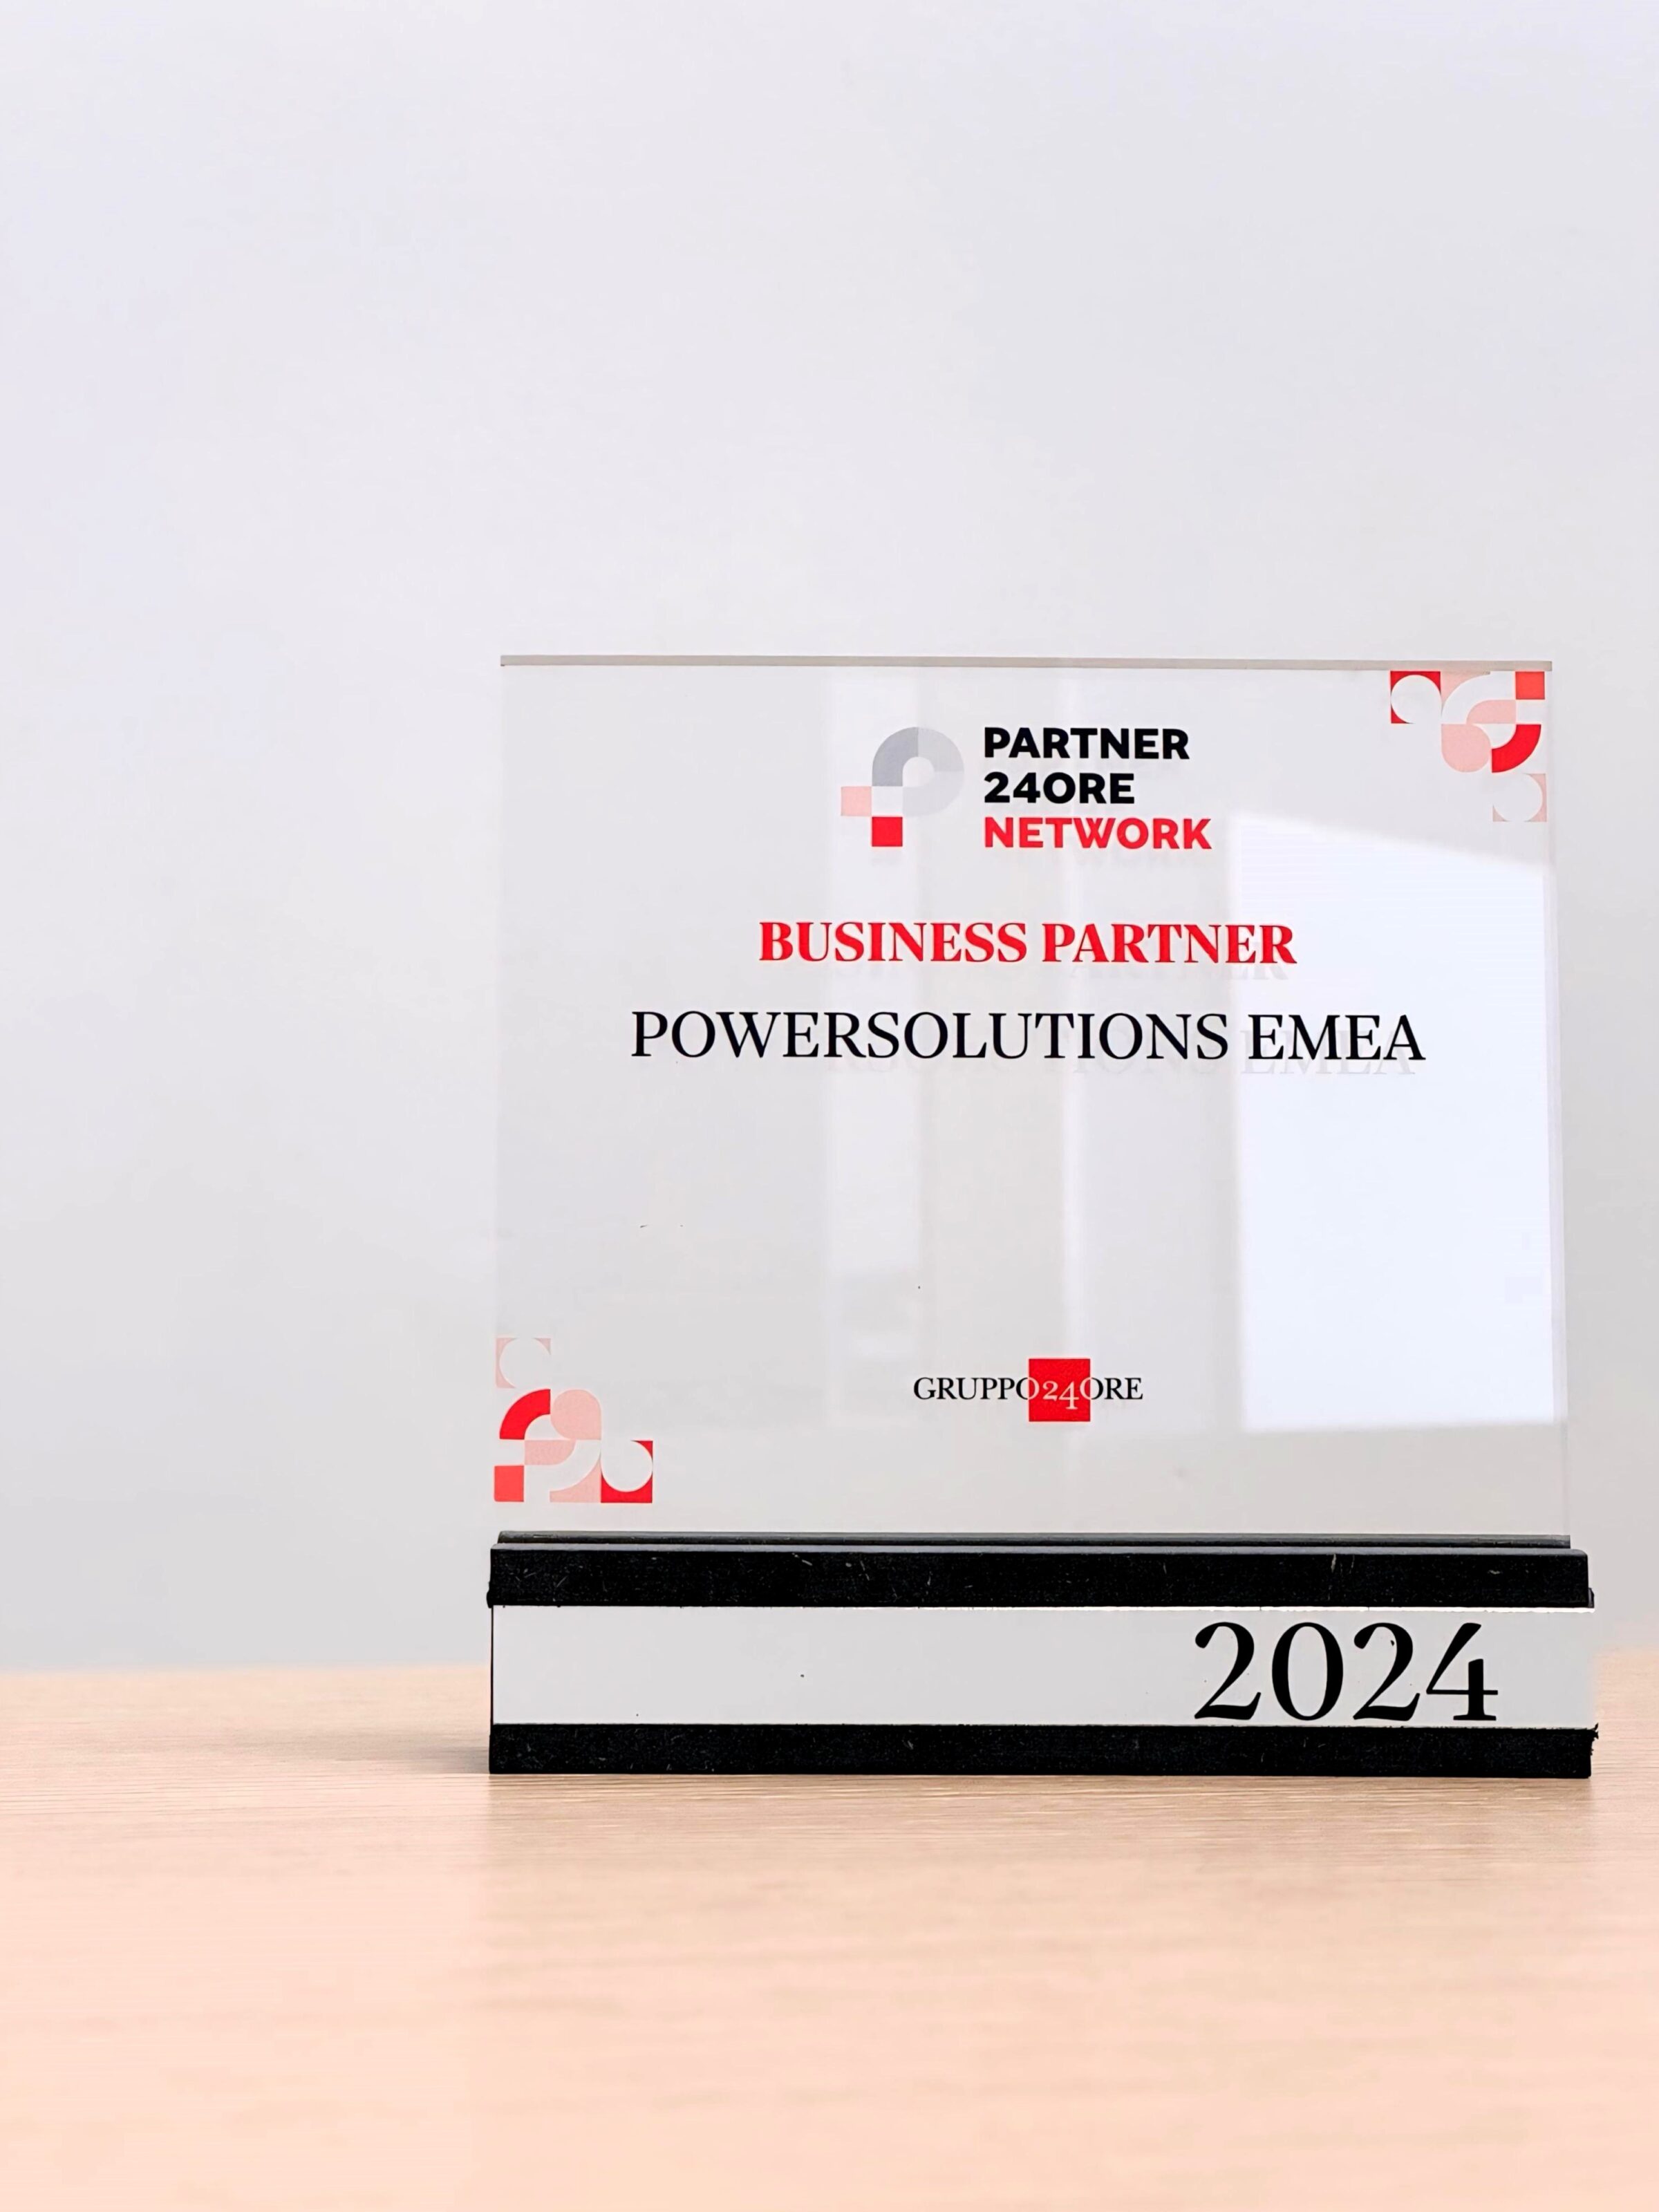 PowerSolutions riceve la prestigiosa targa Business Partner 24ore Network